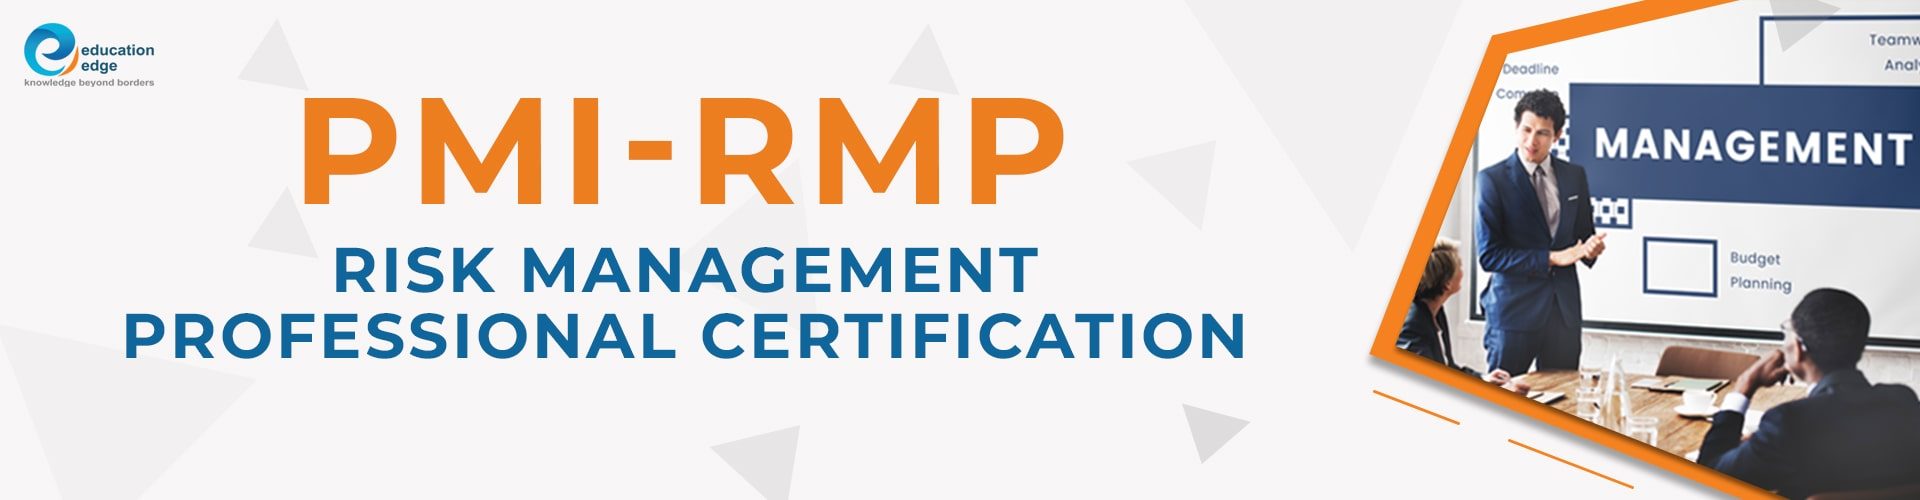 PMI-RMP Risk Management Professional Certification